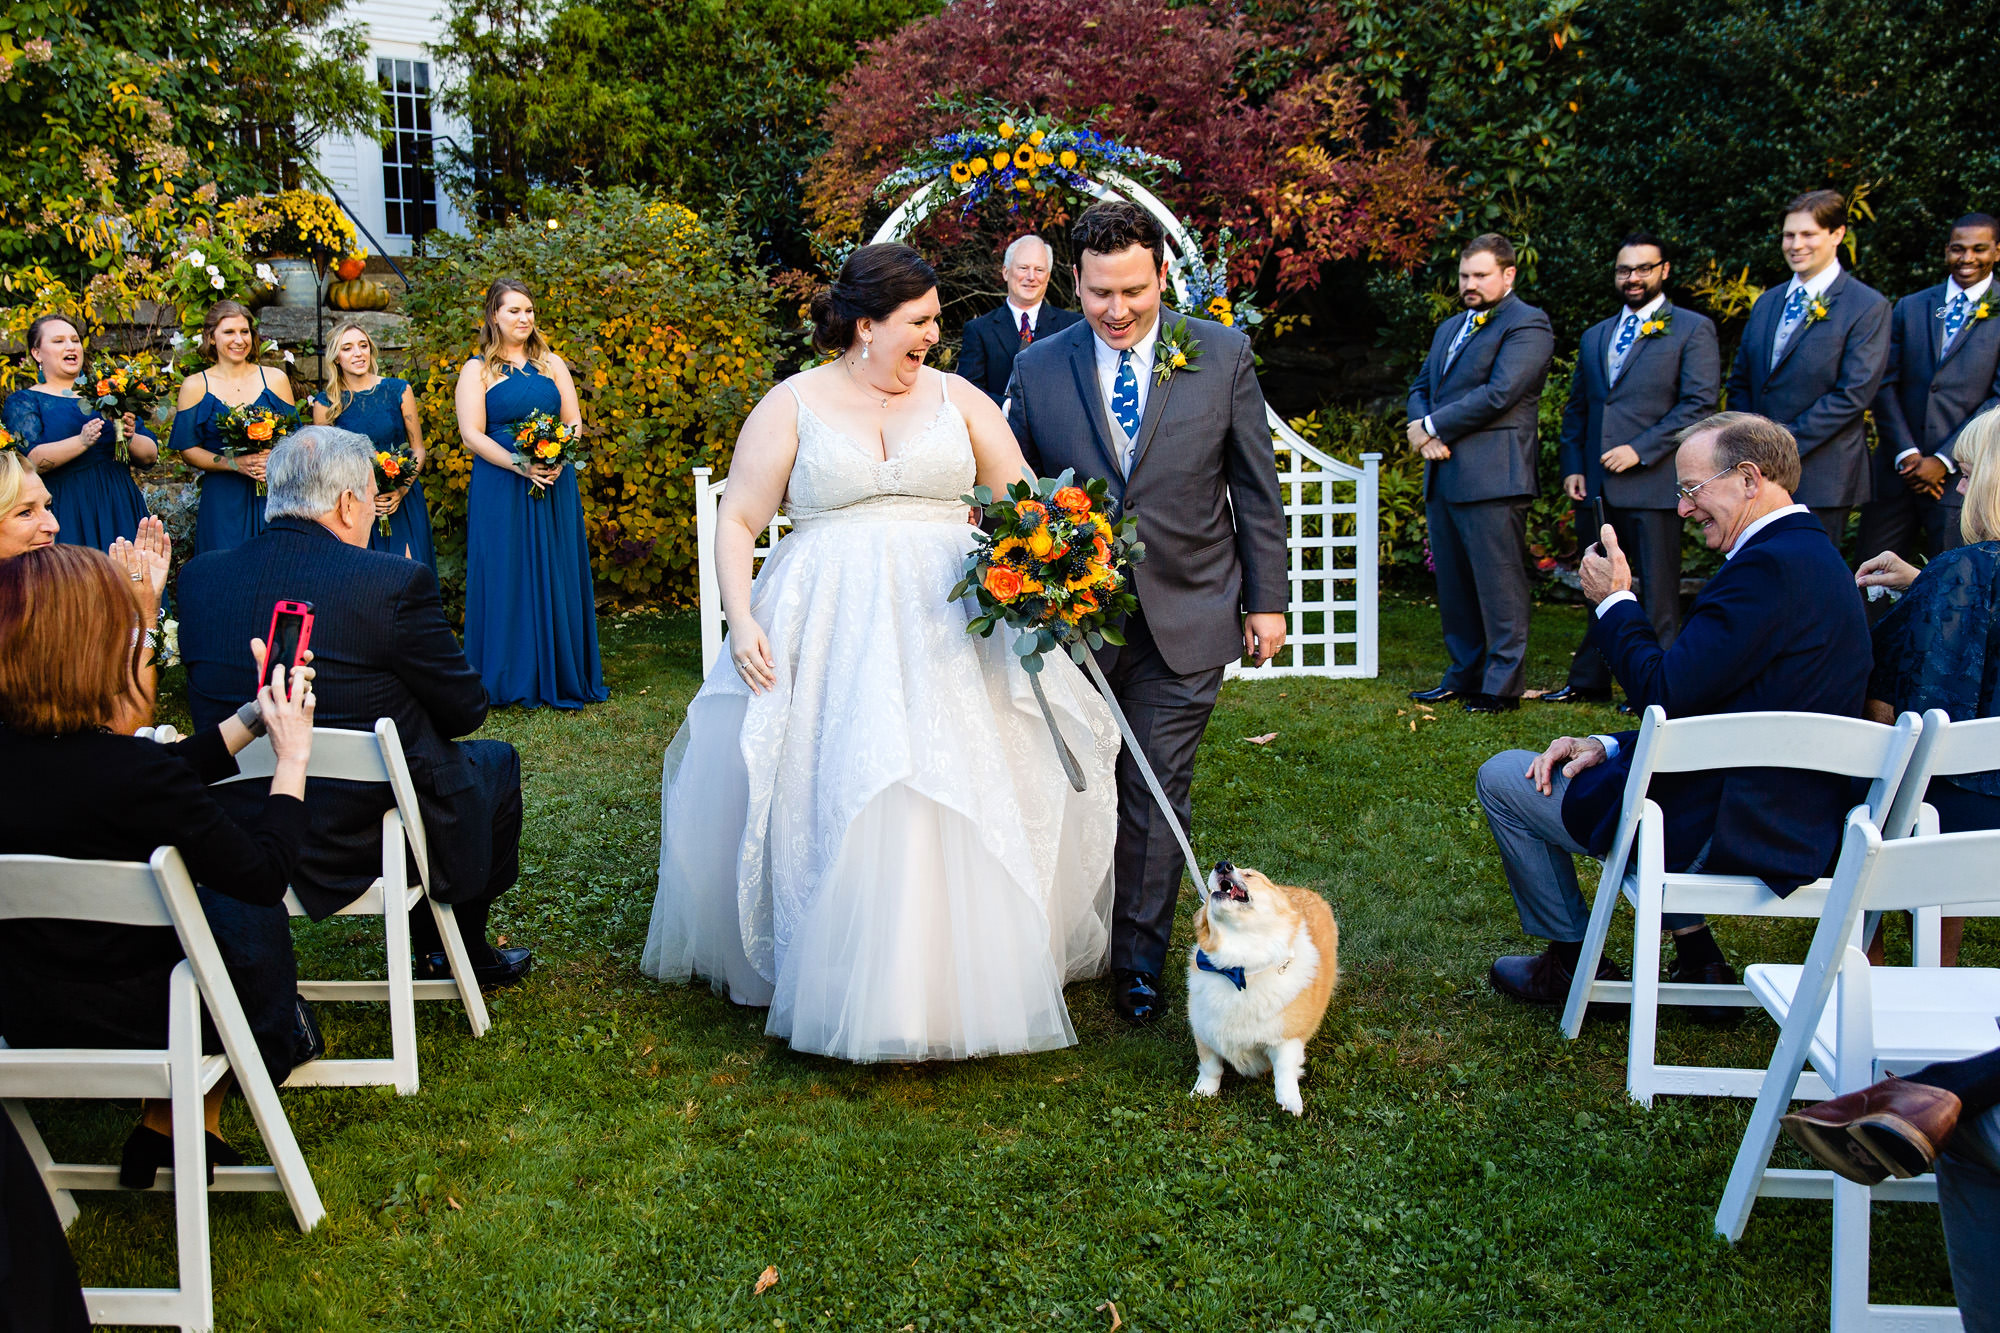 A beautiful wedding ceremony in Freeport Maine